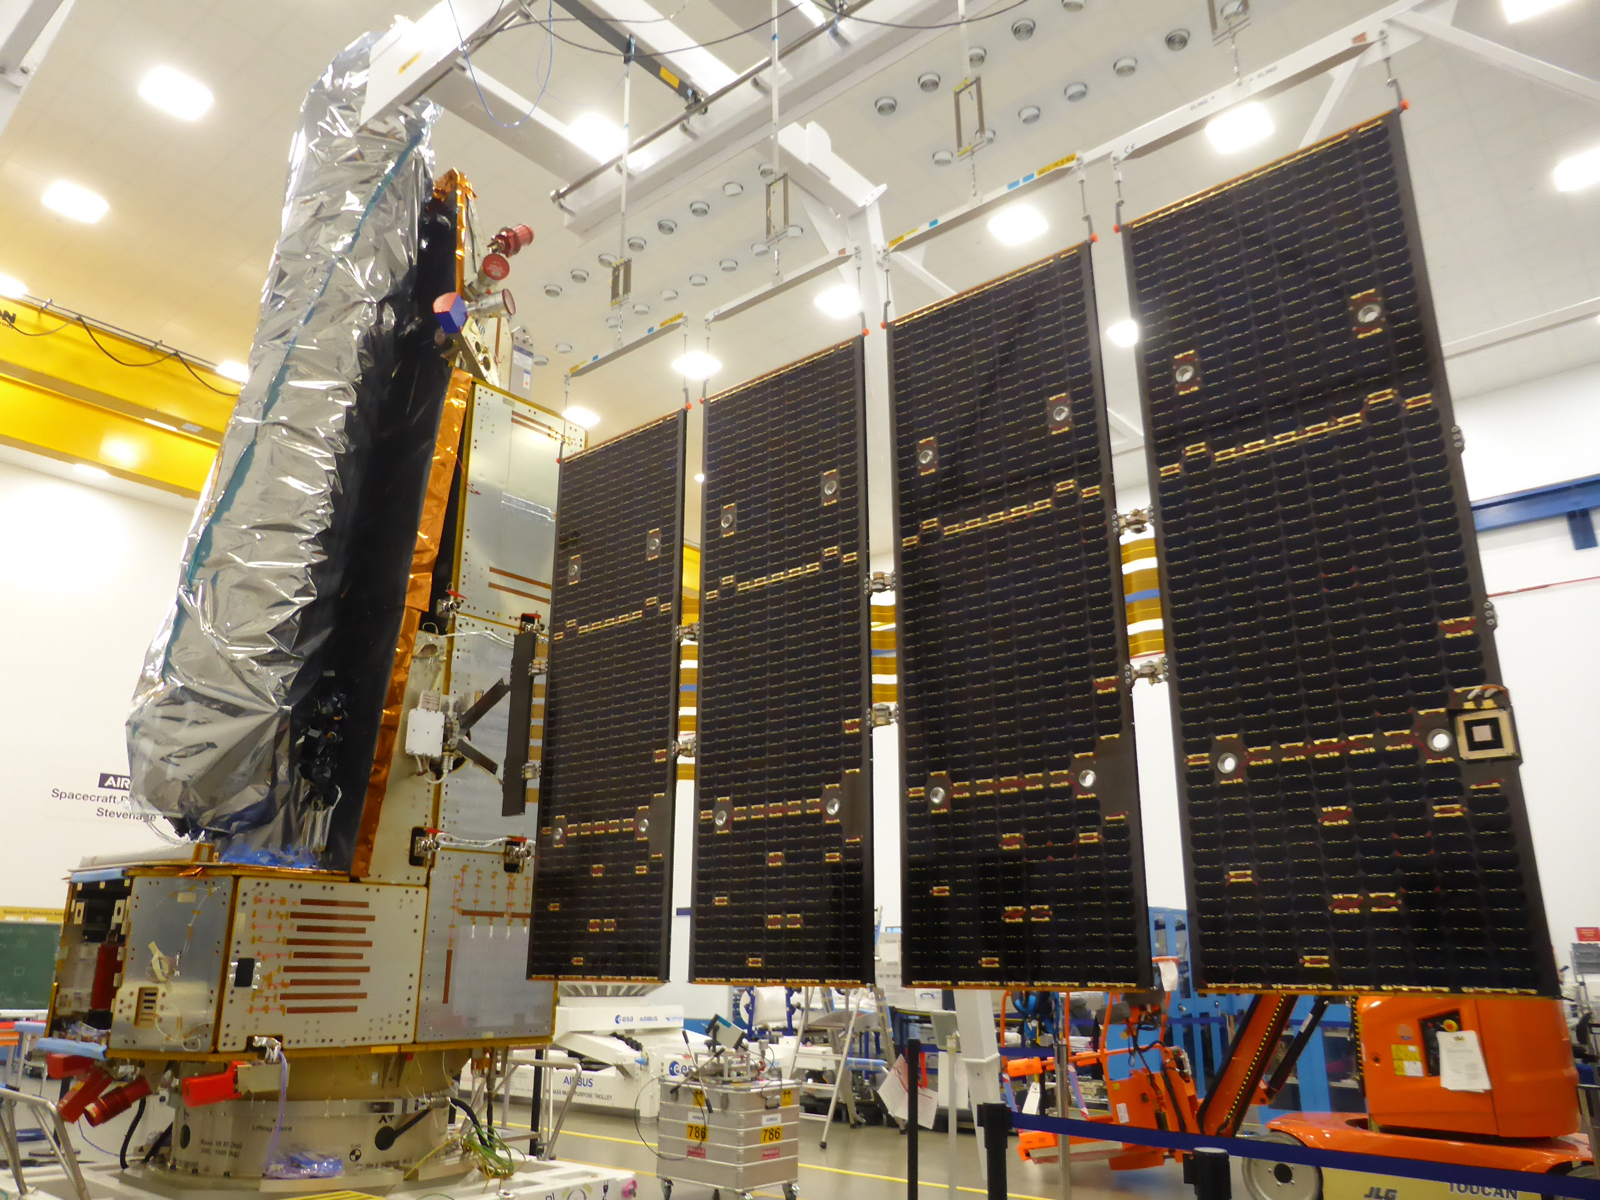 Airbus Satelite de biomasa con su panel solar desplegado